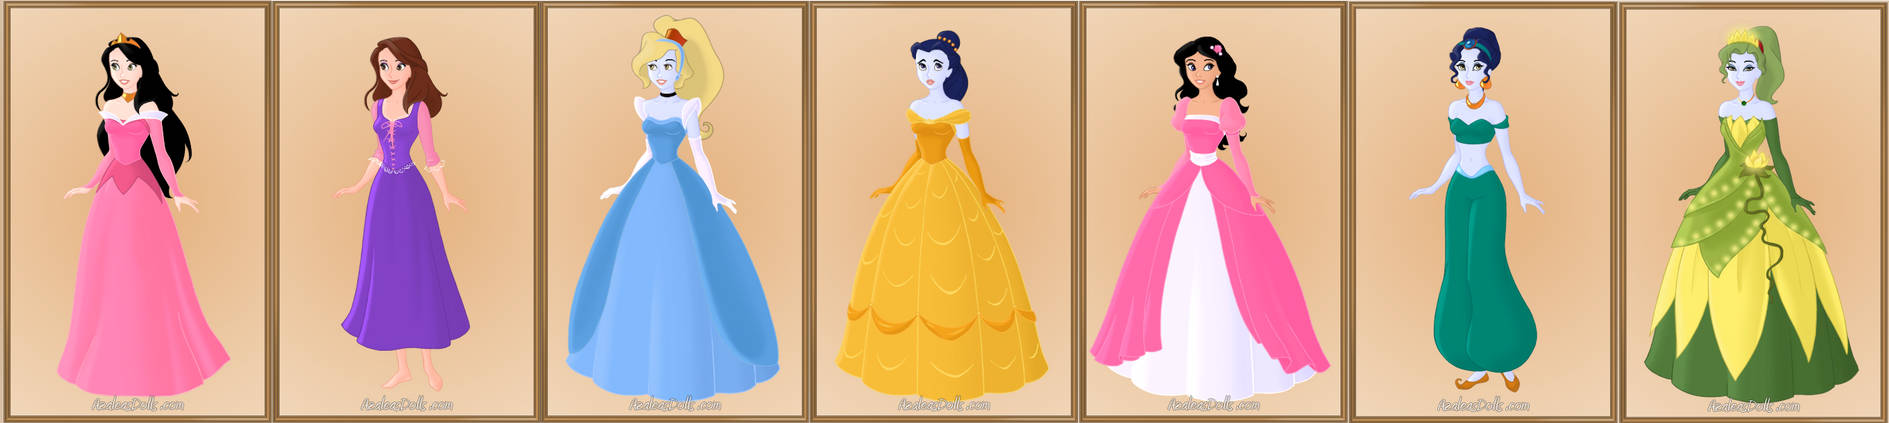 Disney Wubb Princesses by roseprincessmitia on DeviantArt